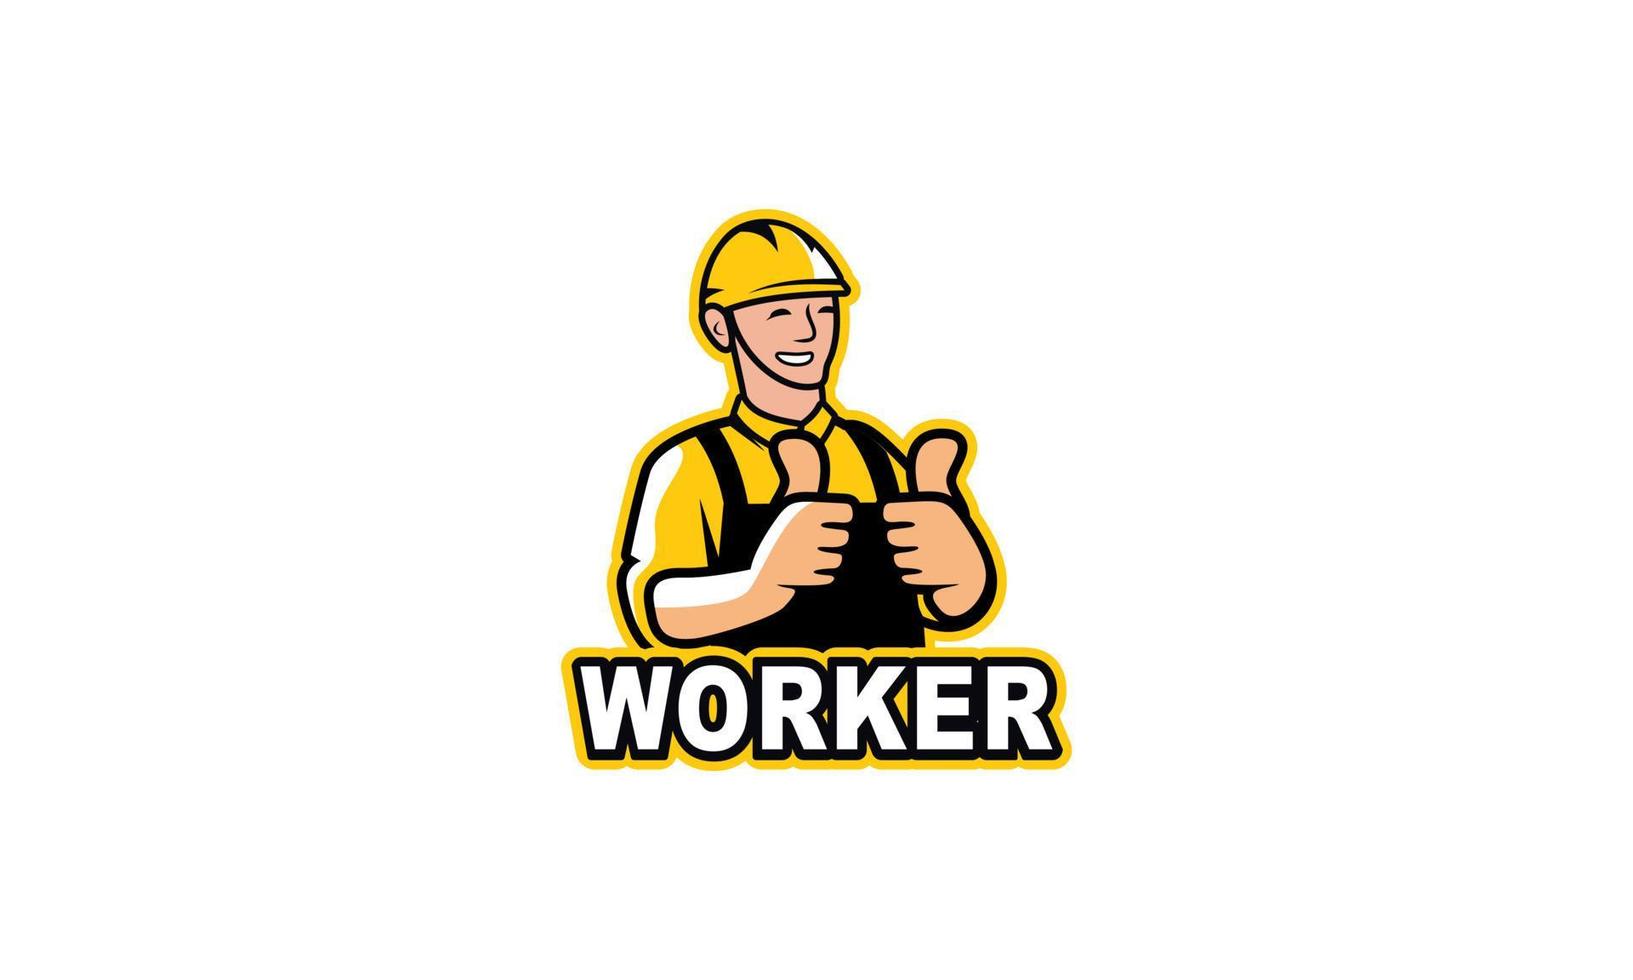 Service worker logo vector illustration